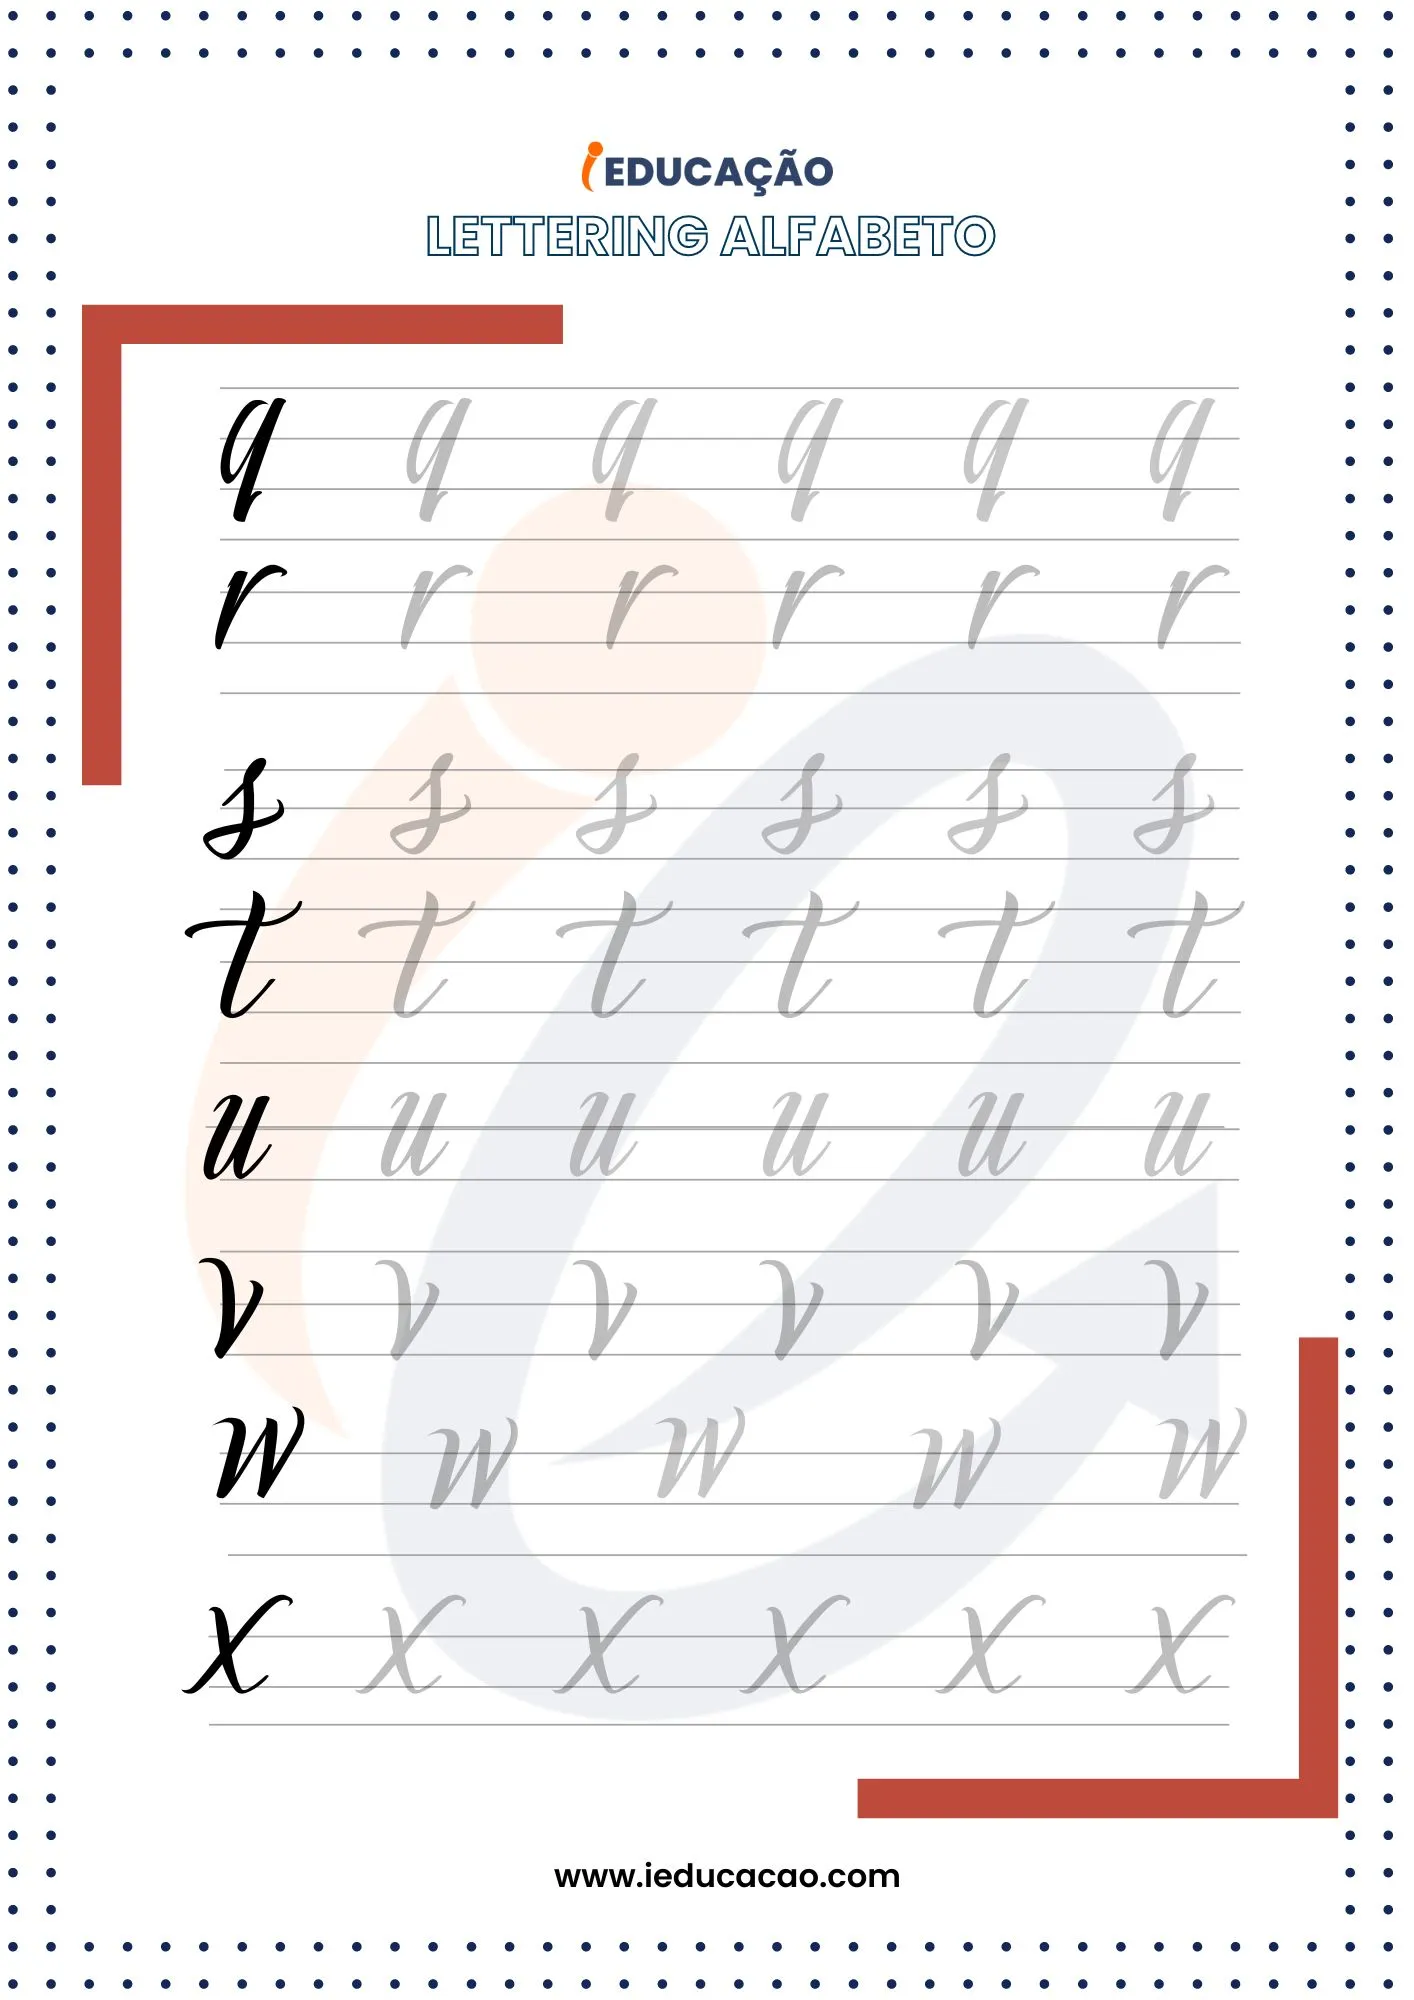 Lettering Alfabeto- Alfabeto para Treinar Lettering do Q ao X